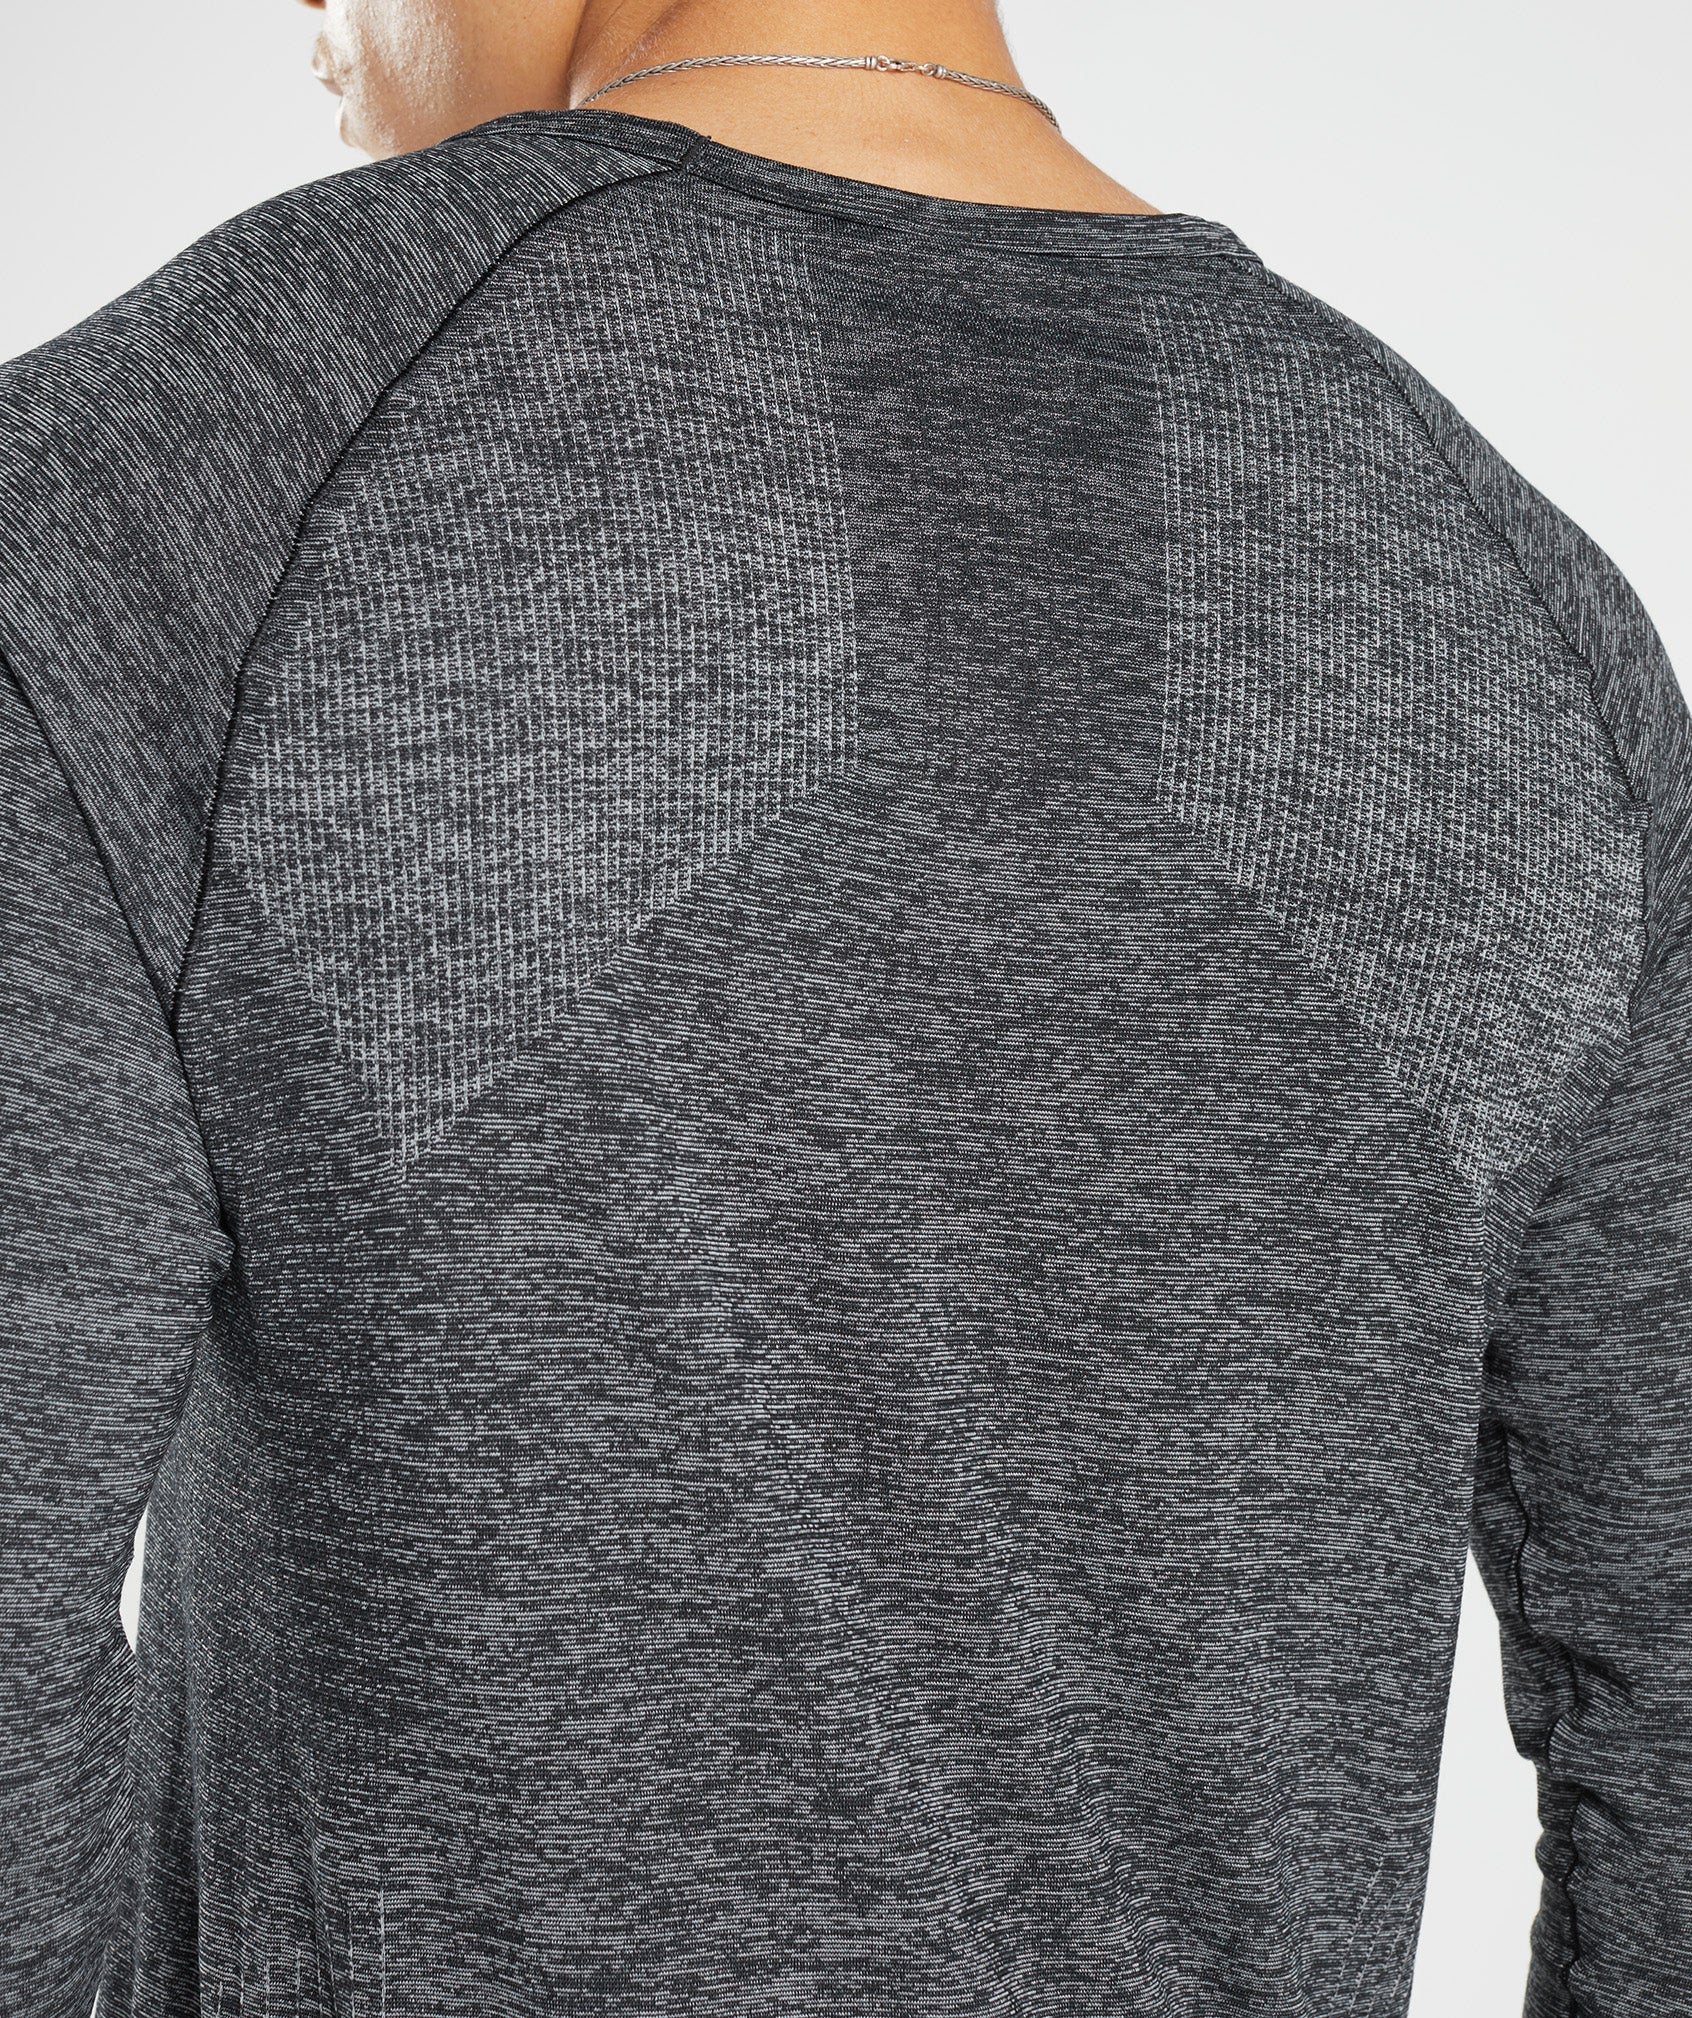 Retake Seamless Long Sleeve T-Shirt in Black/White Marl - view 3